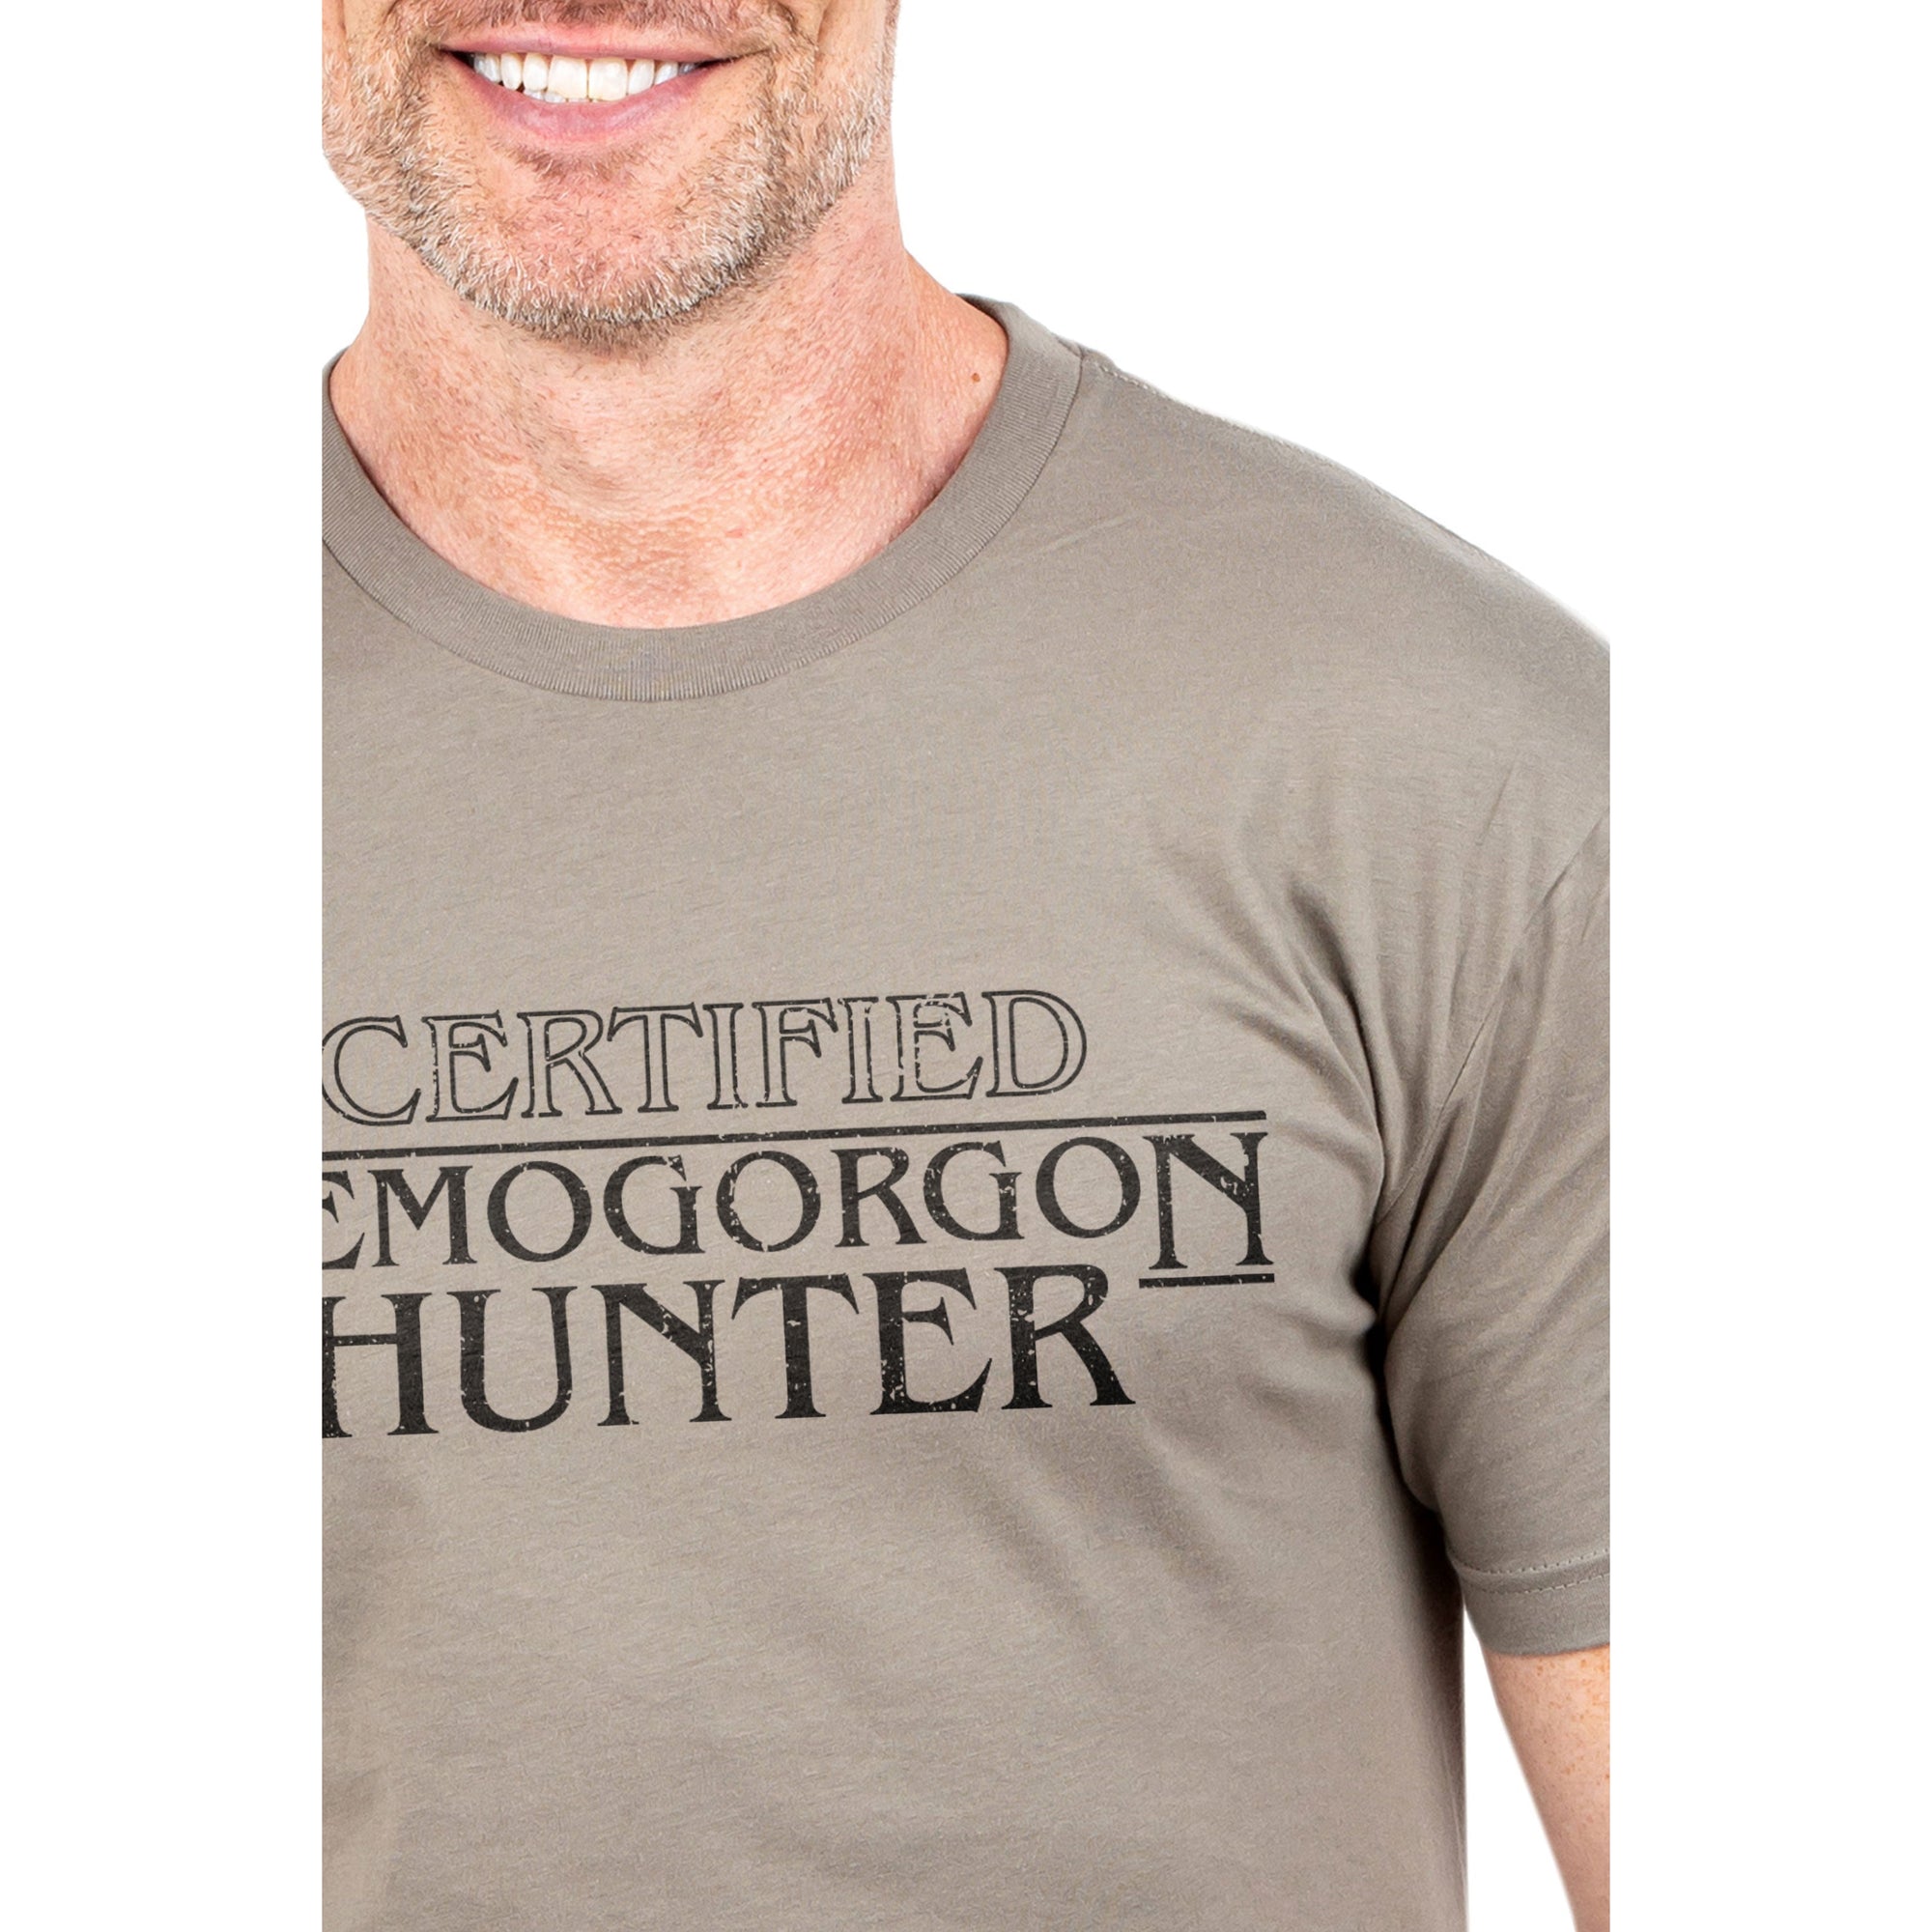 Certified Demogorgon Hunter Printed Graphic Men's Crew T-Shirt Heather Tan Closeup Image